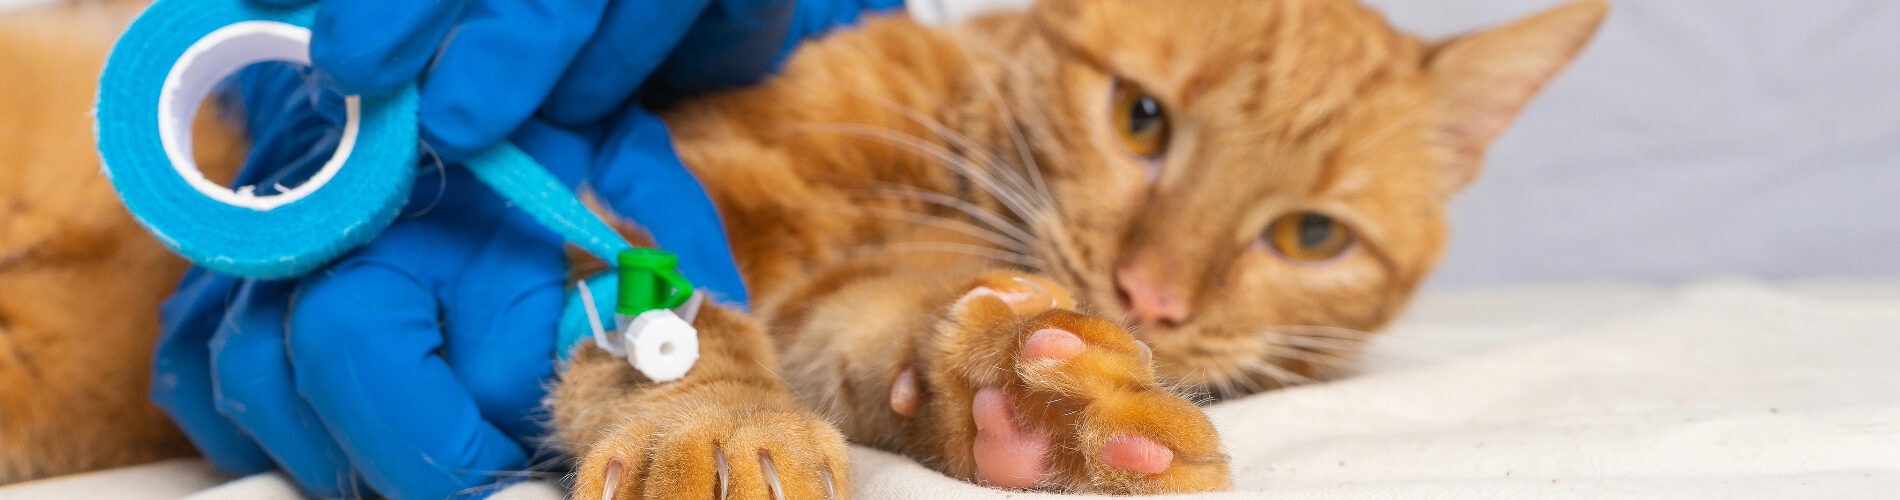 An orange cat getting a bandage around its leg